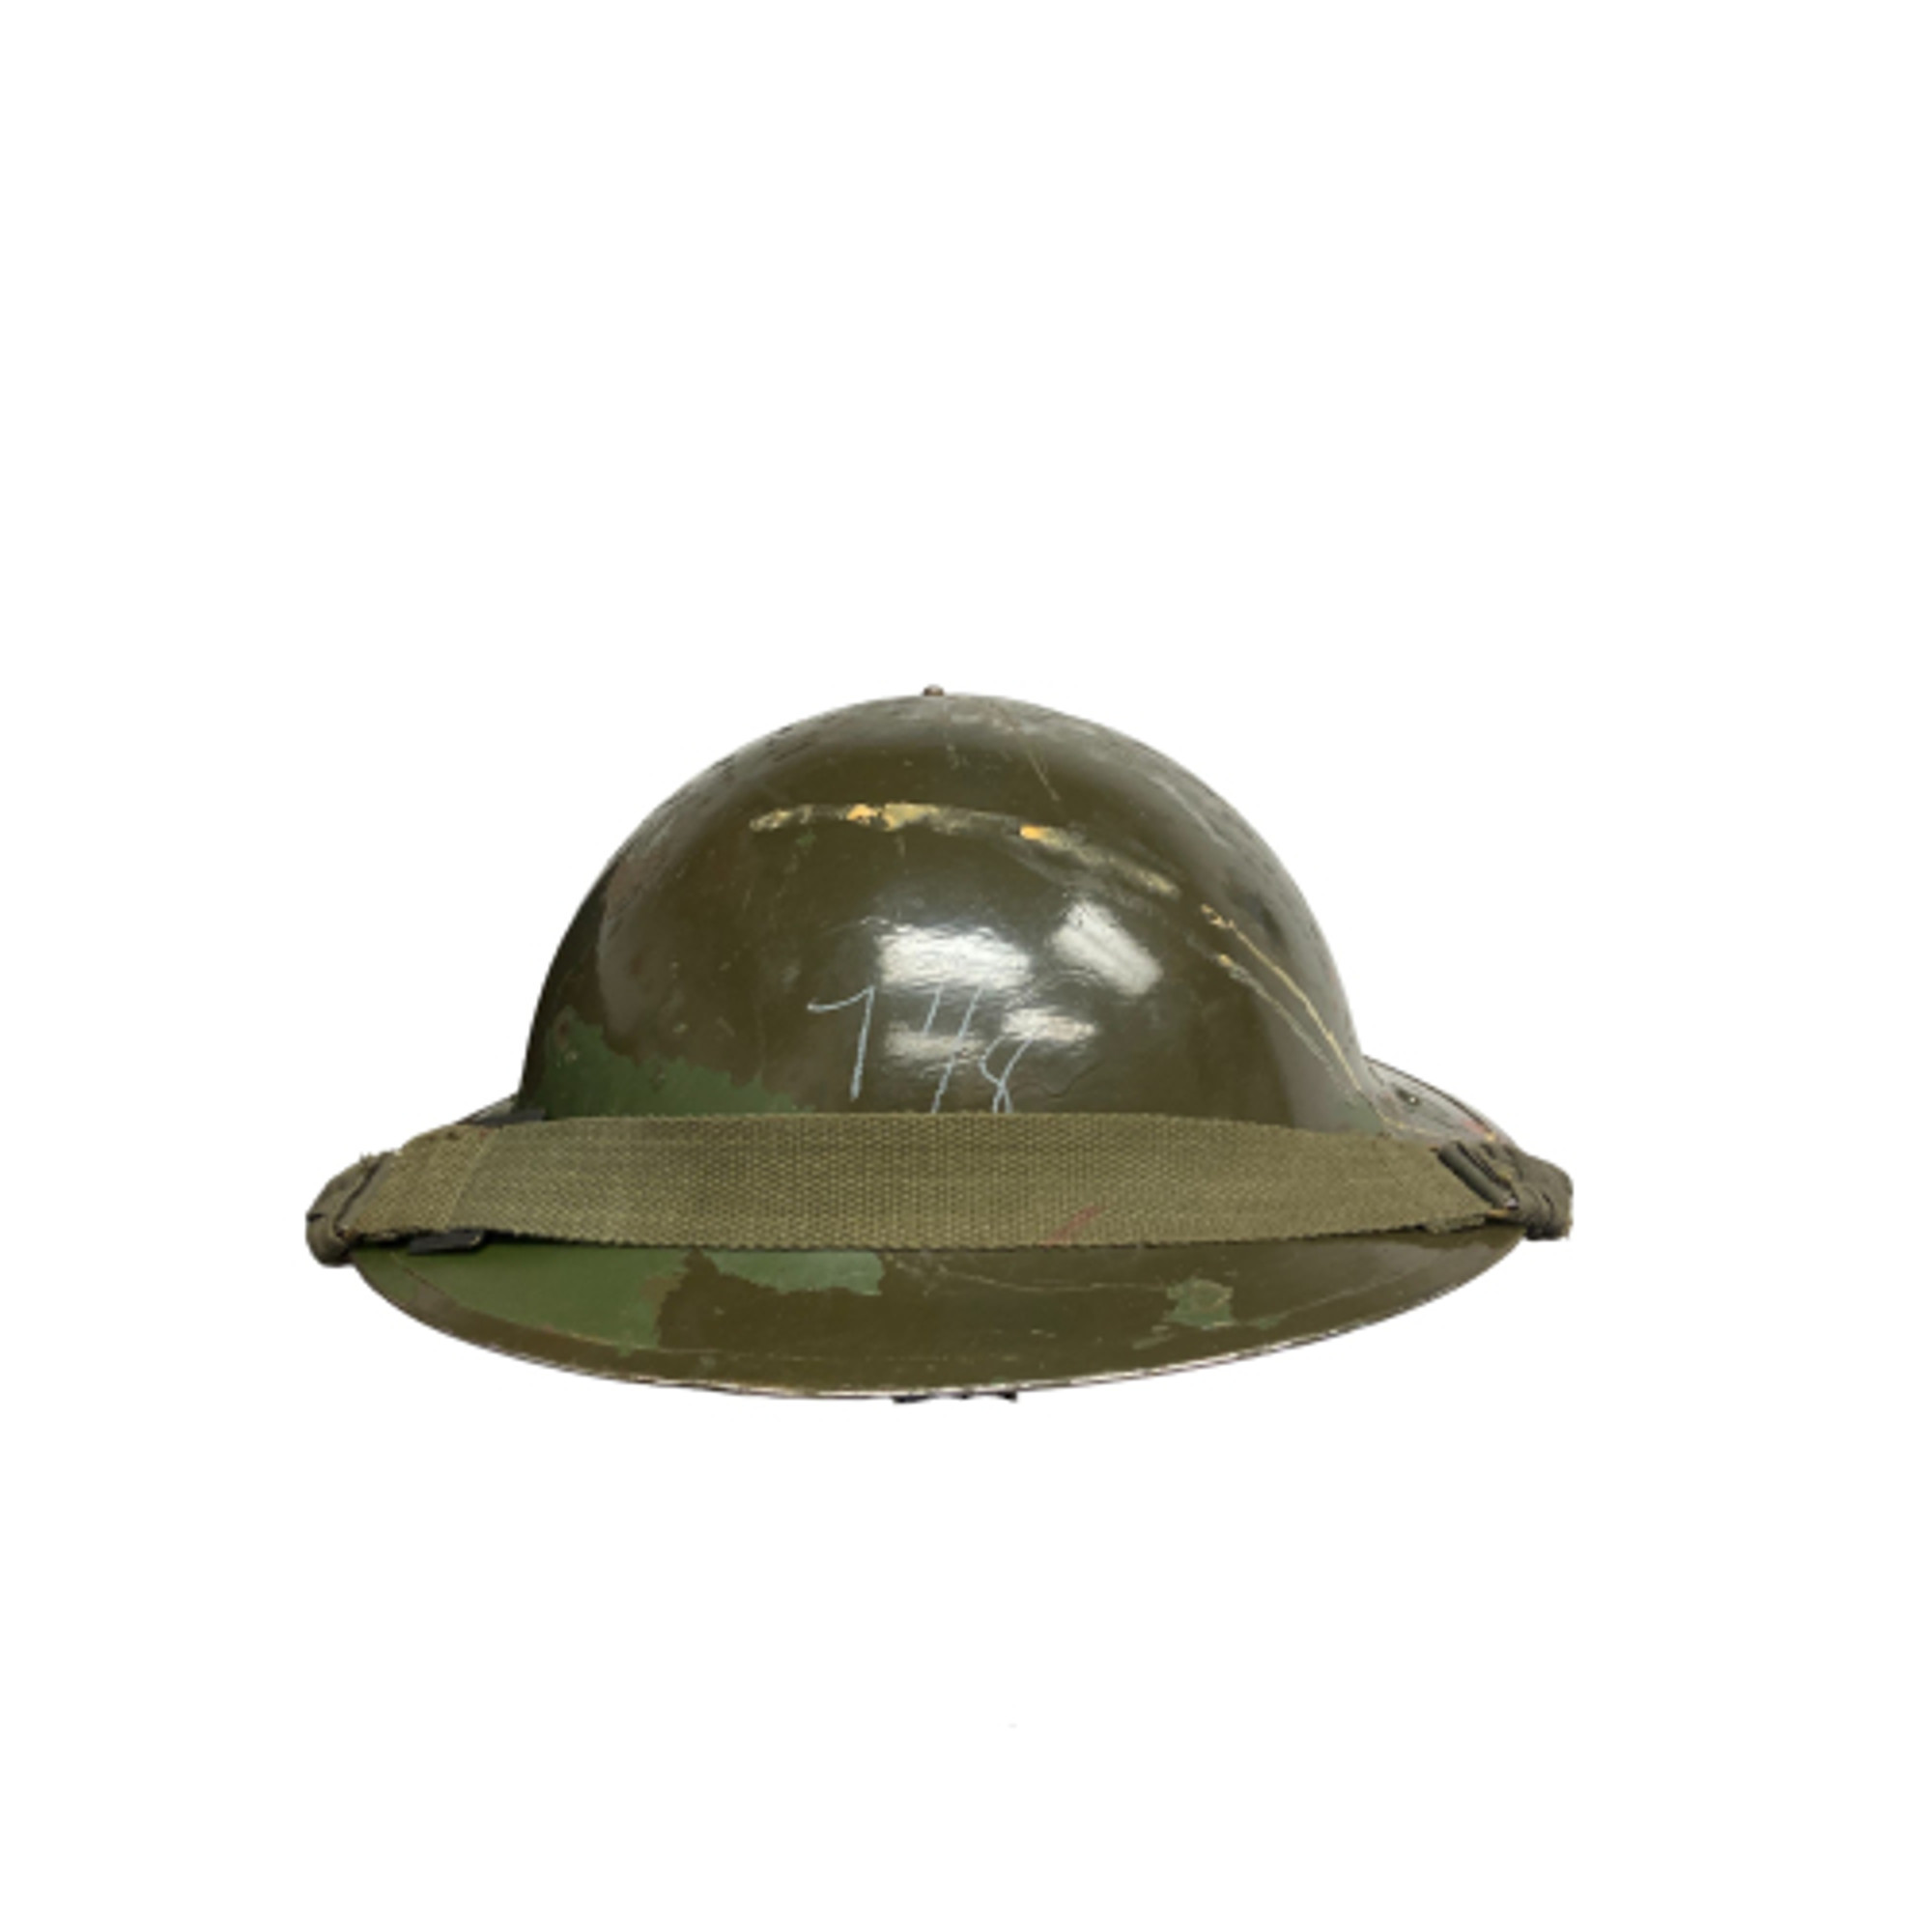 Canadian Armed Forces WW2 Helmet - General Steele Wares w/ Early Post War Strap